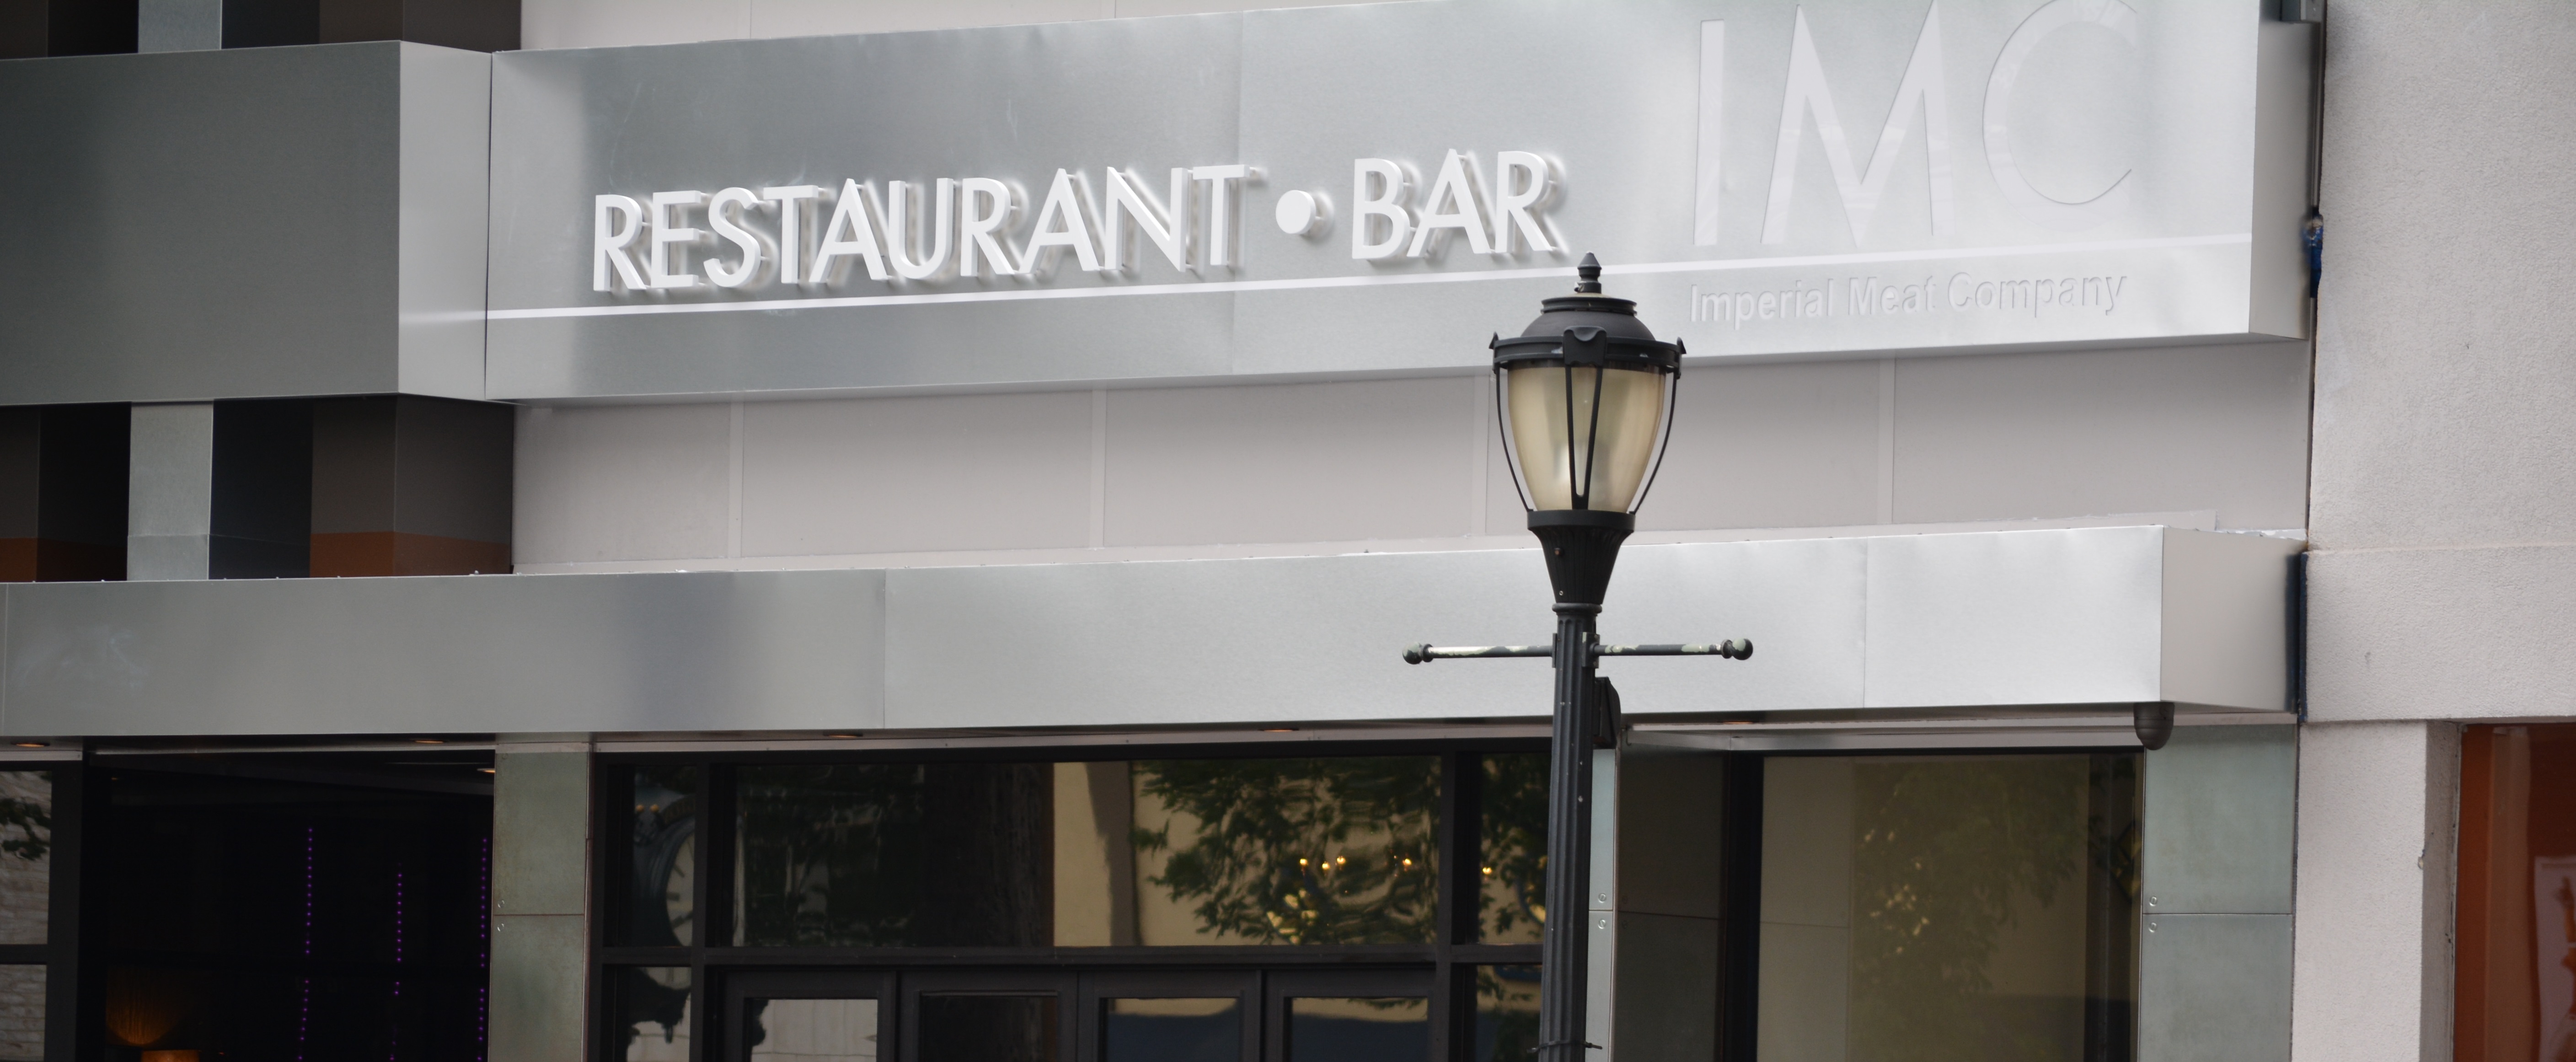 IMC Restaurant & Bar Photo